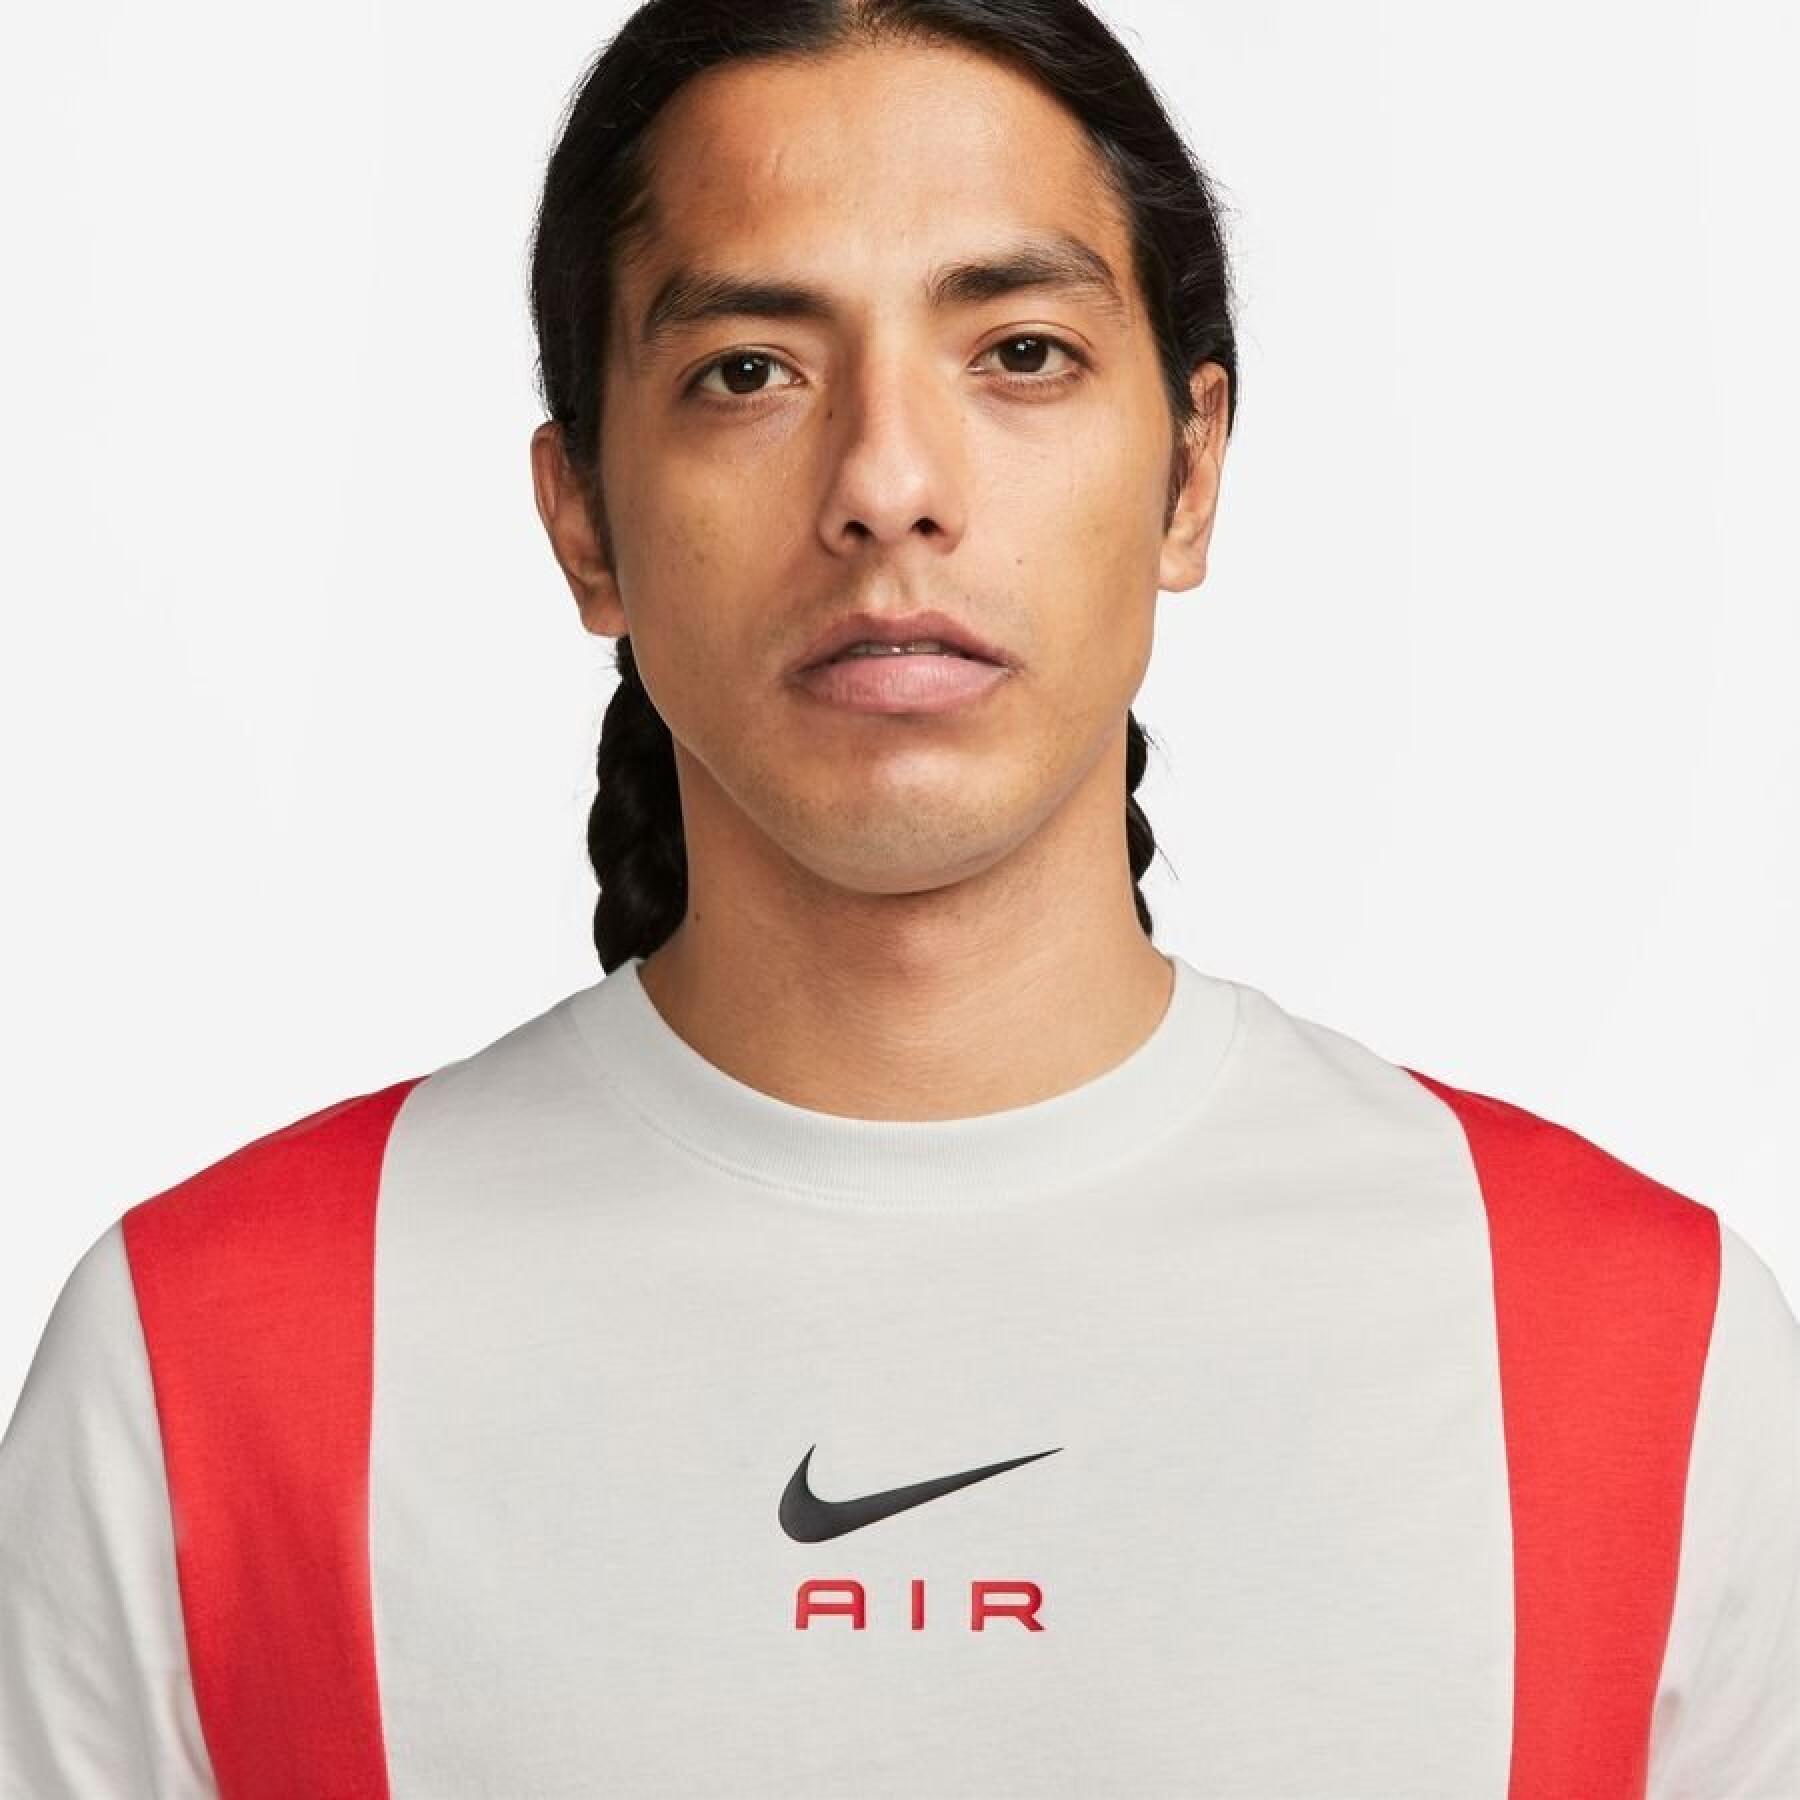 T-shirt Nike Air - Nike - Marques - Lifestyle